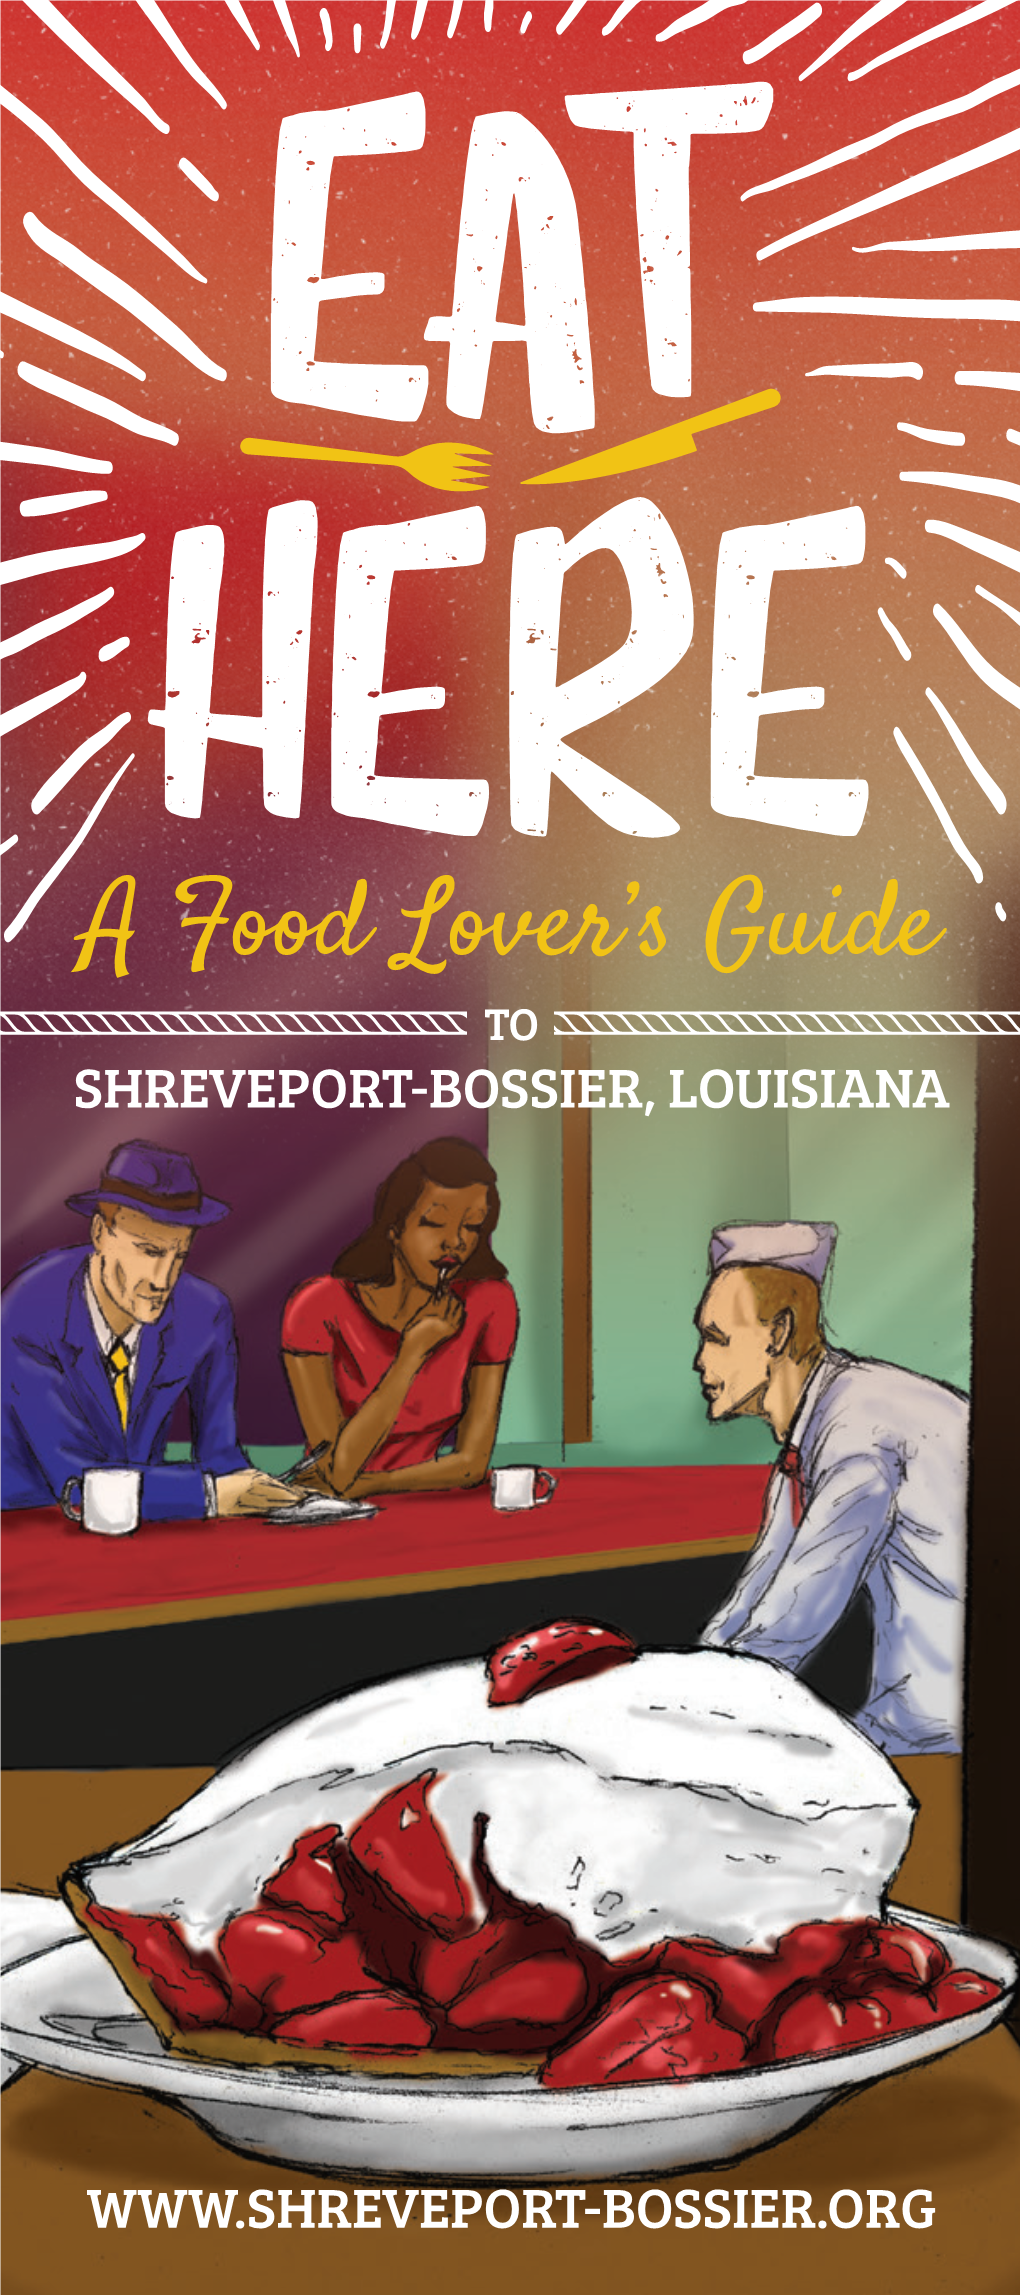 A Food Lover's Guide to Shreveport-Bossier